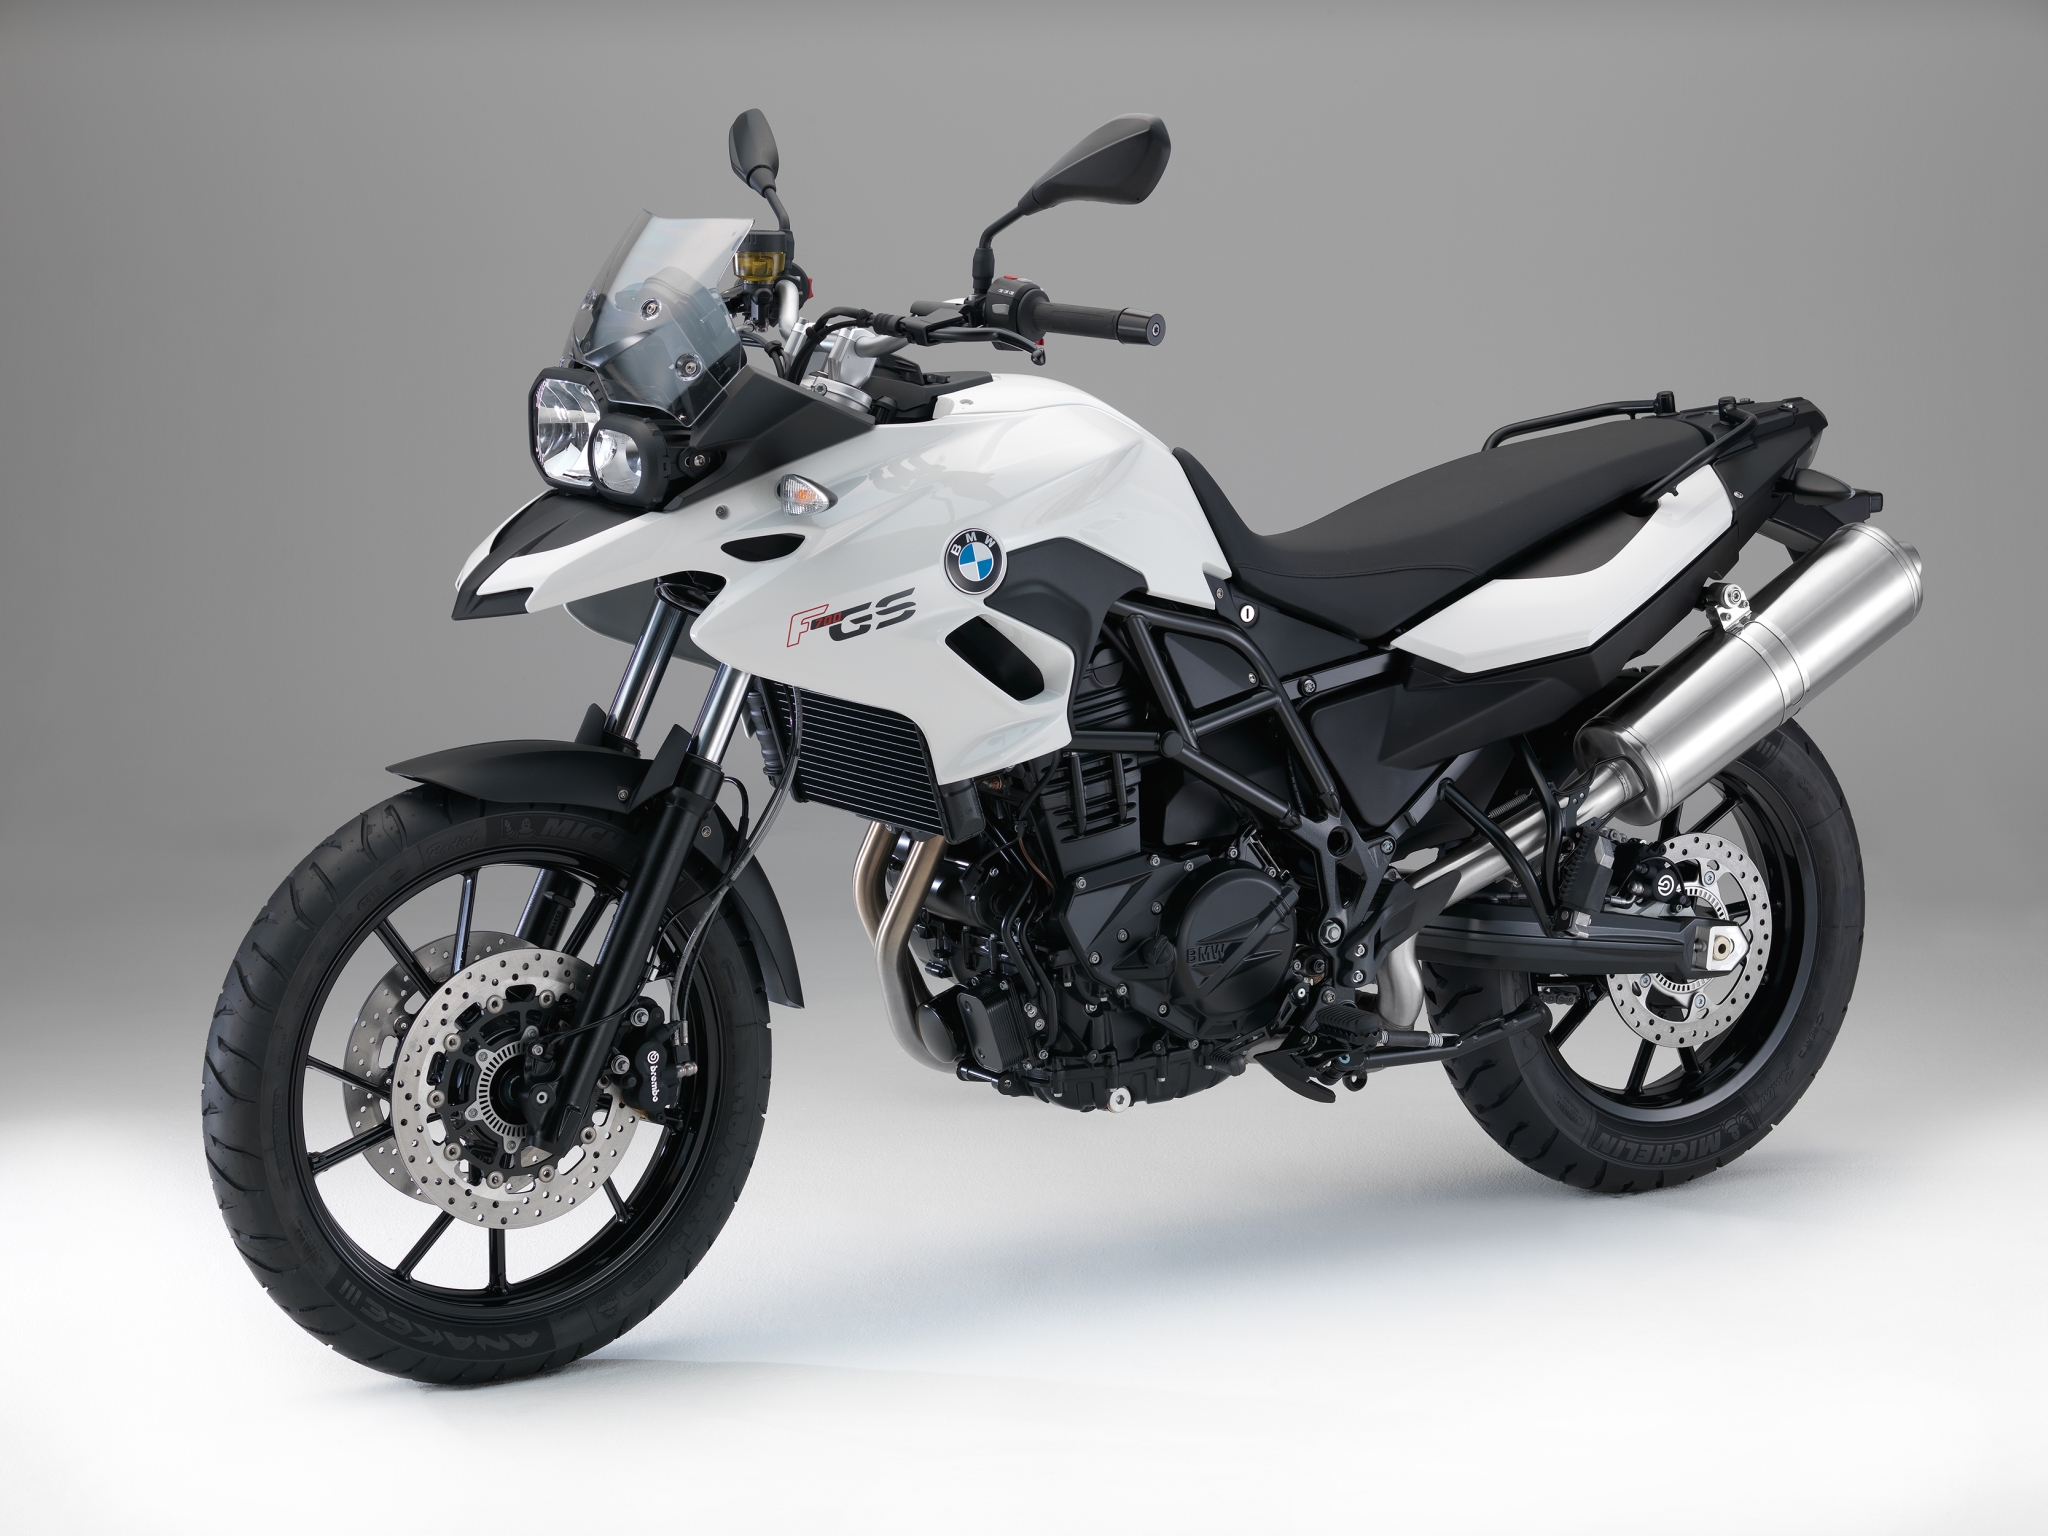 2015 Bmw Motorcycles Canada : 2015 BMW F 800 R Preview - webBikeWorld